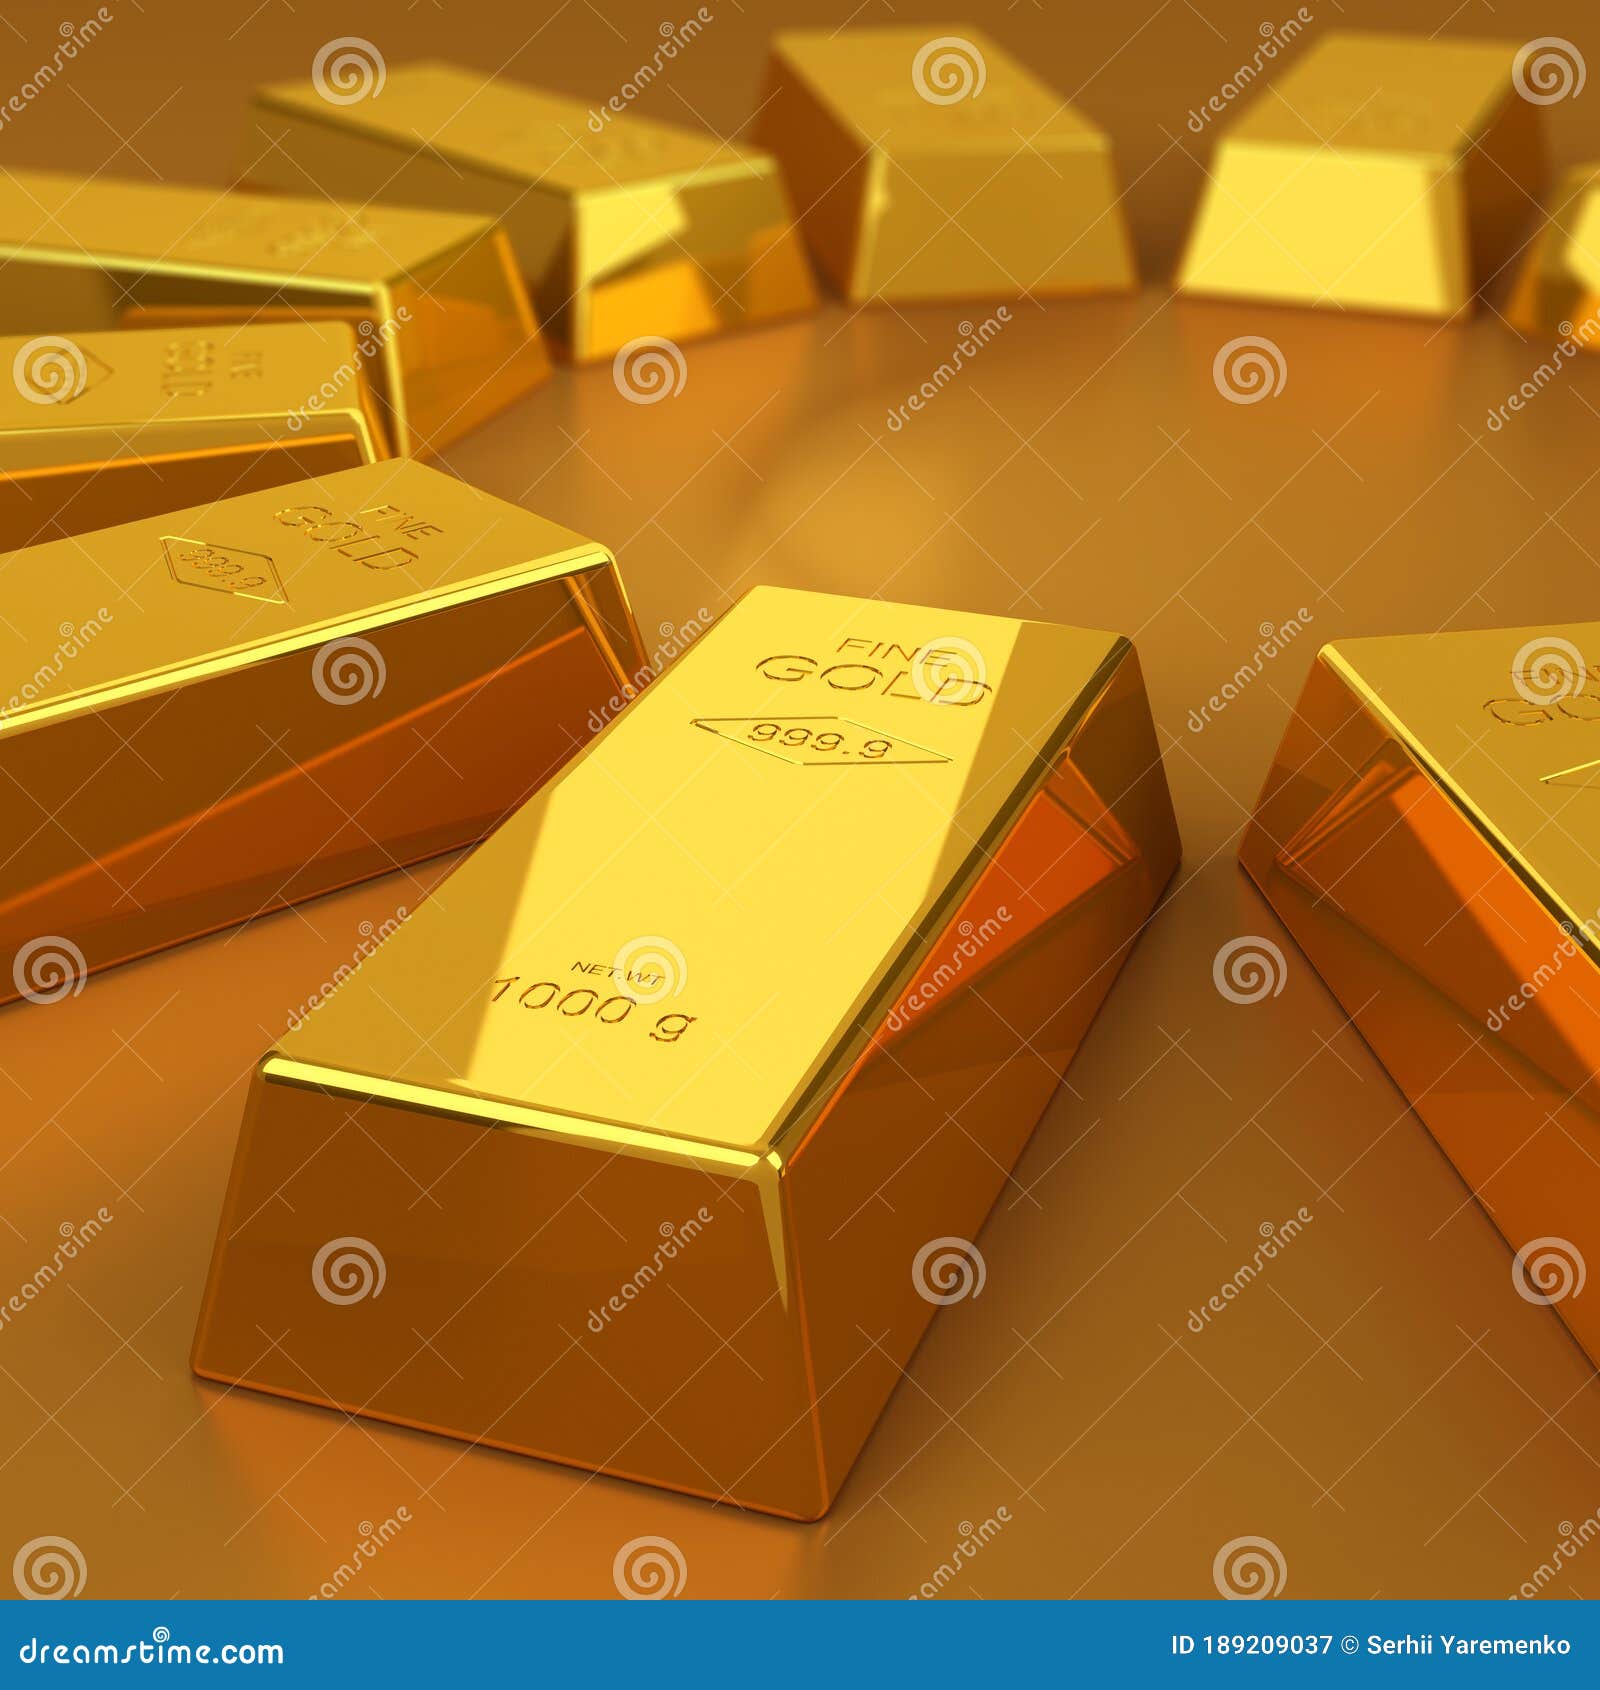 Gold bars stock illustration. Illustration of investment - 189209037